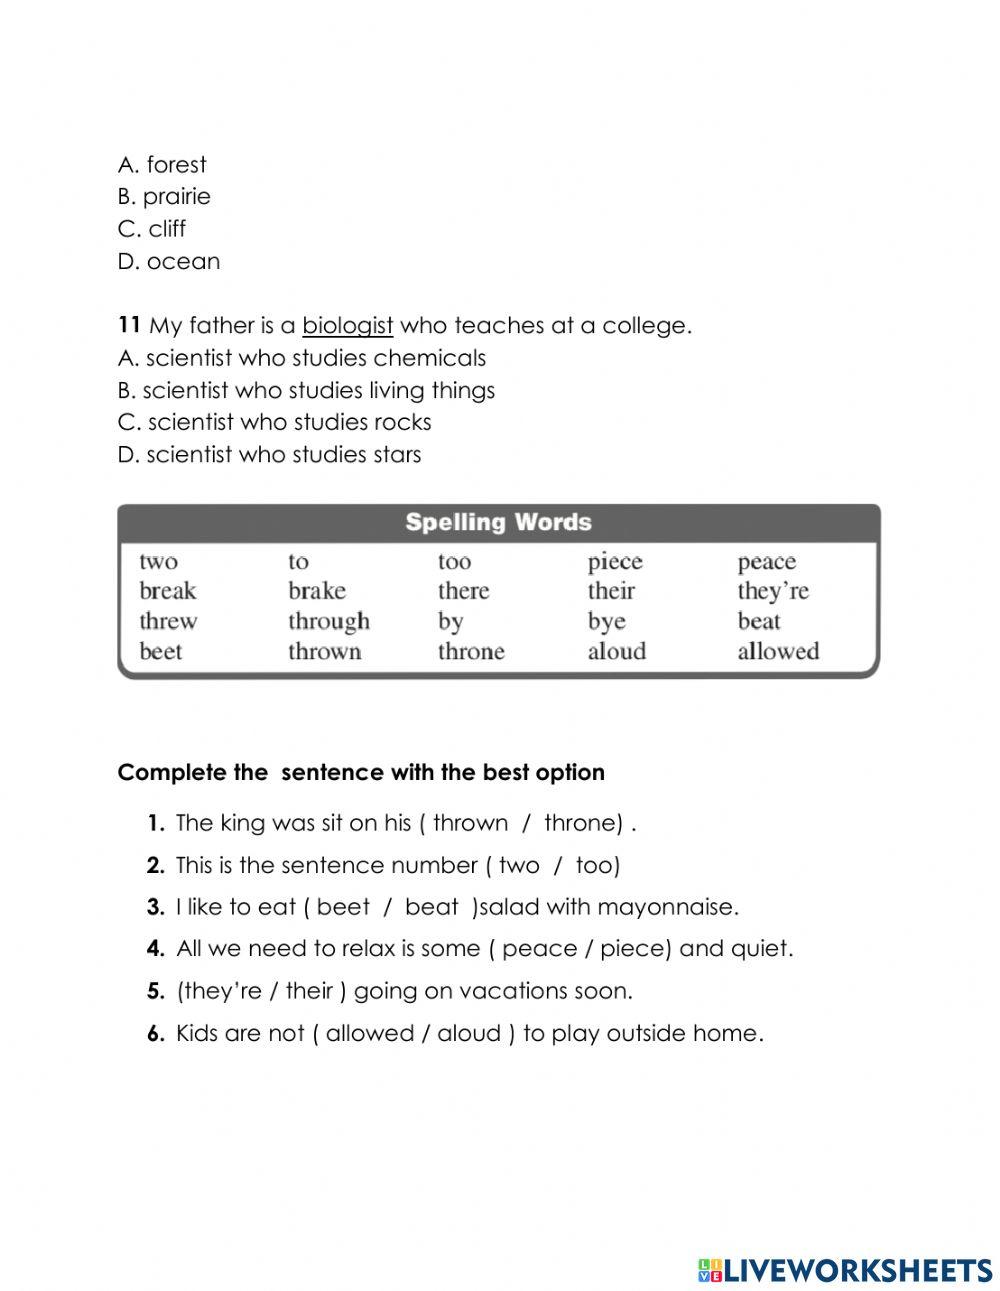 Spelling evaliation piv u5